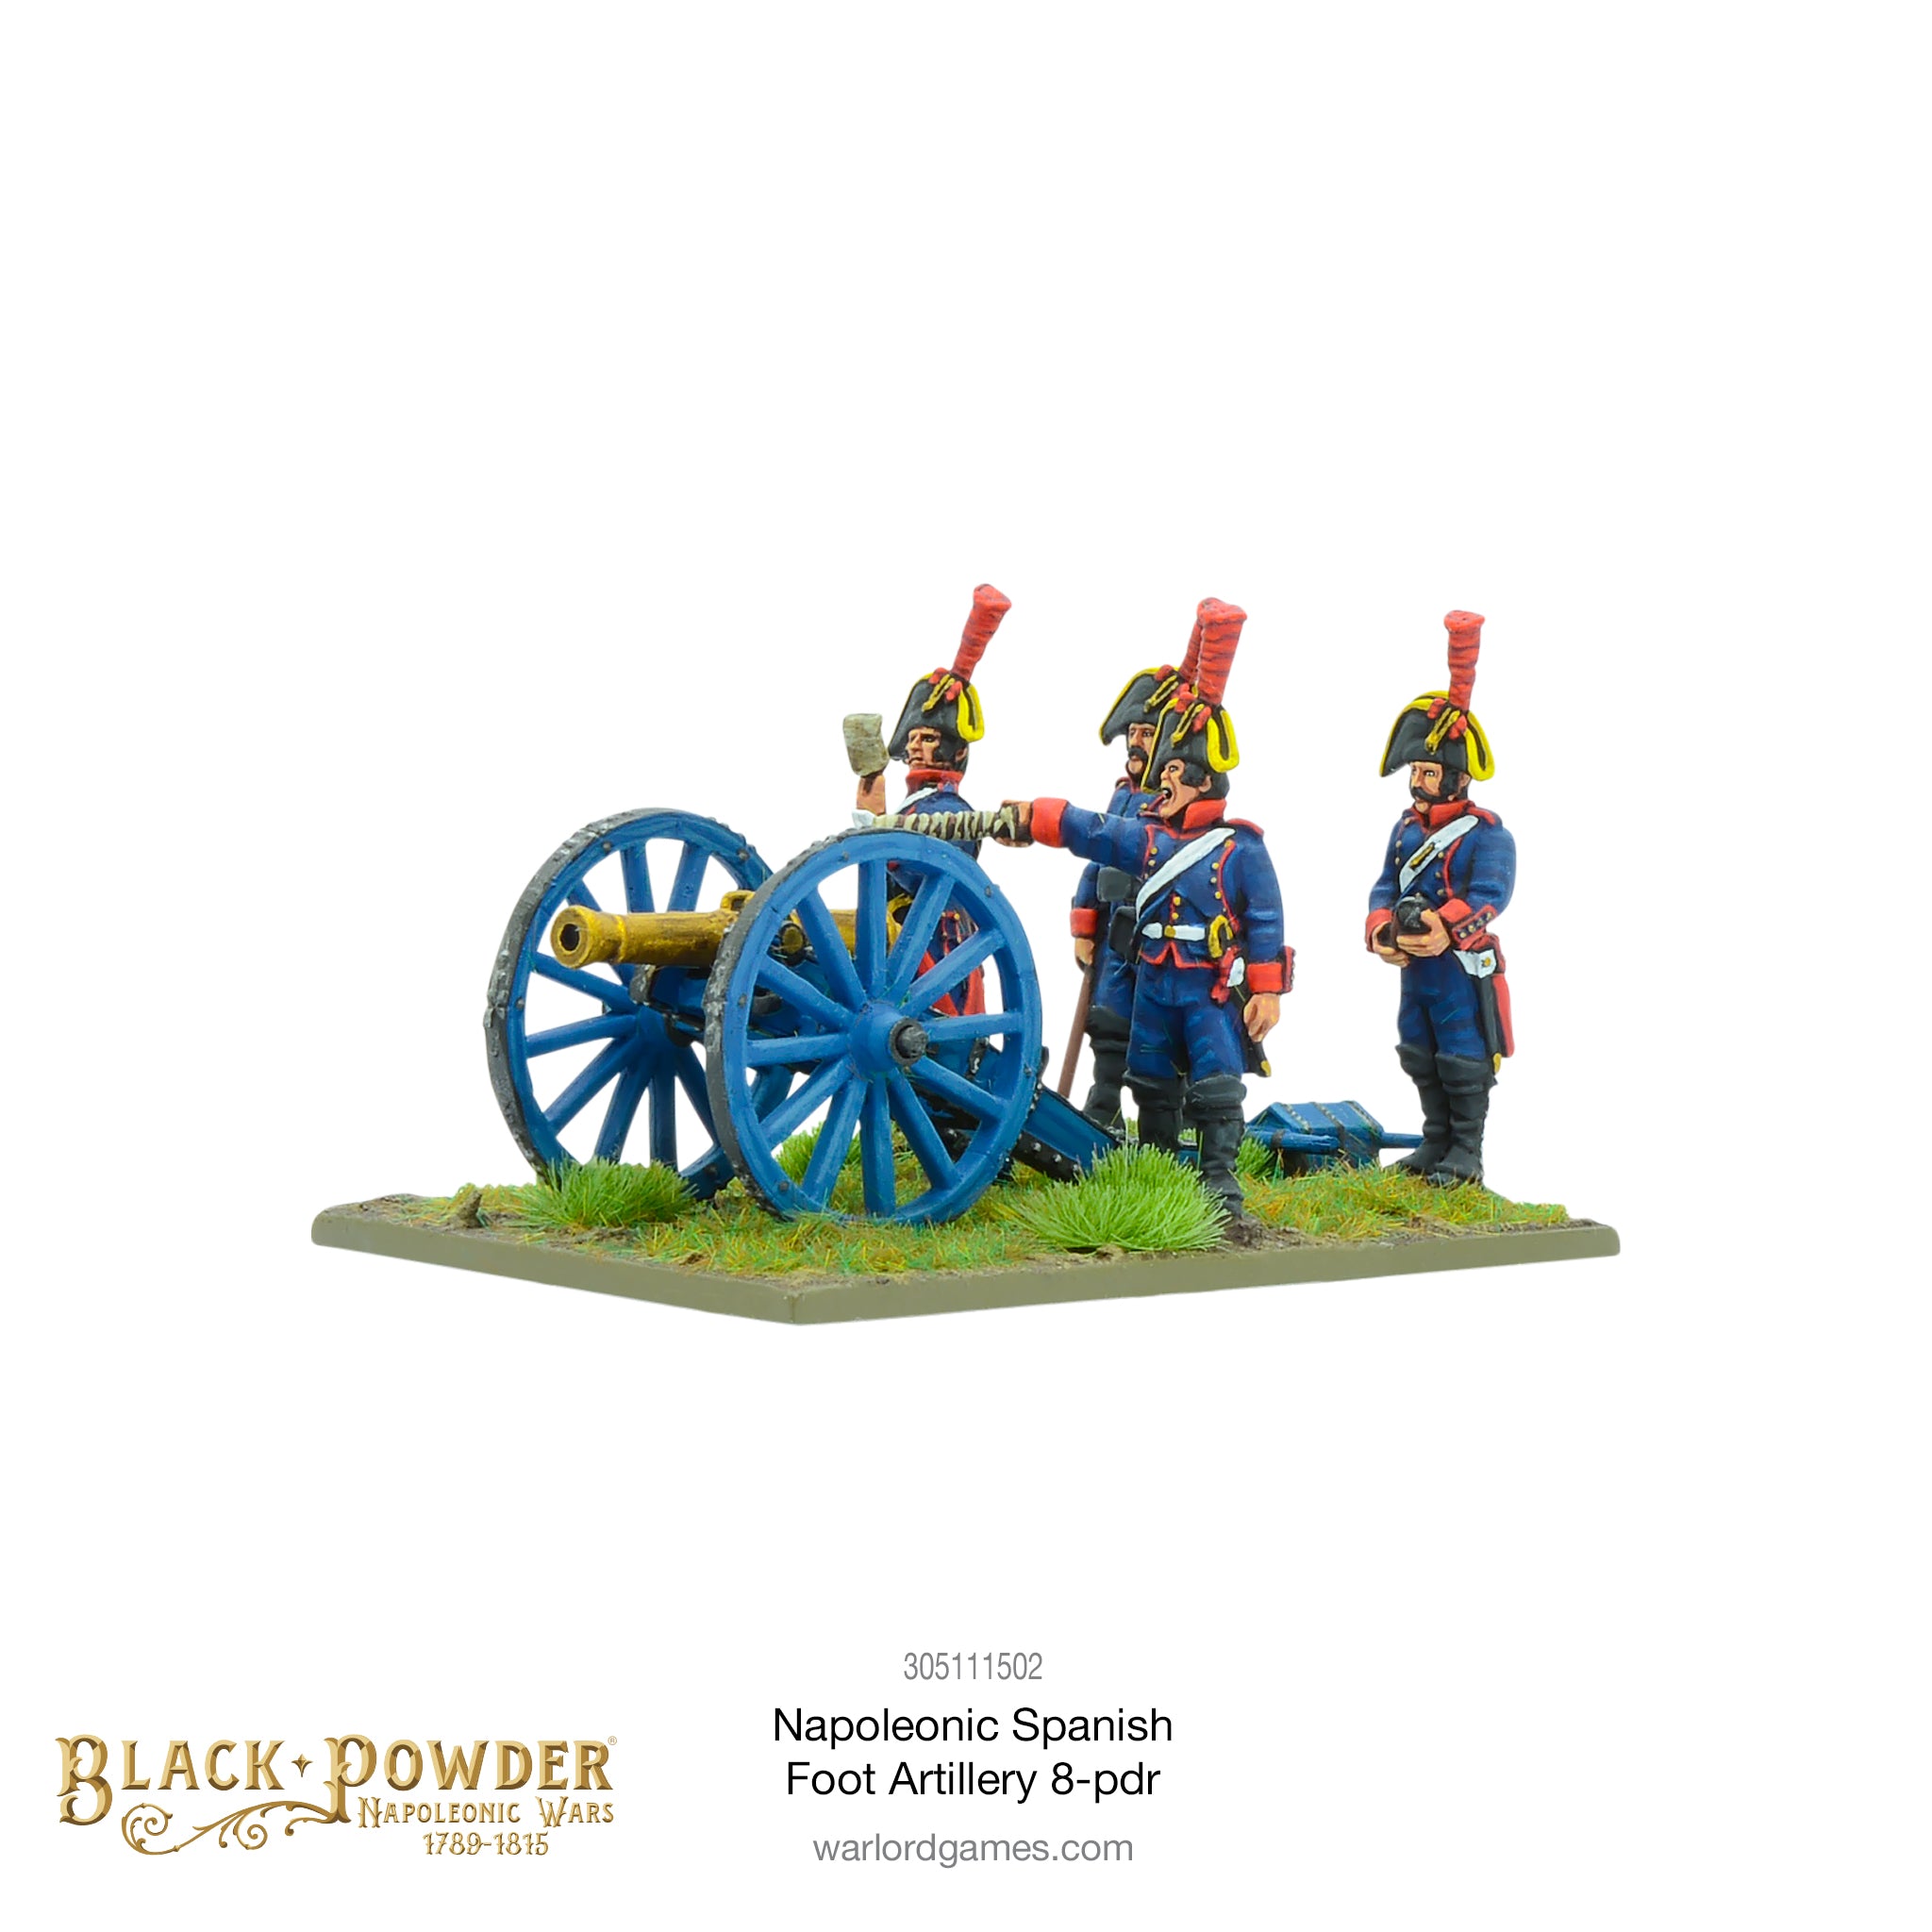 Napoleonic Spanish foot artillery 8-pdr